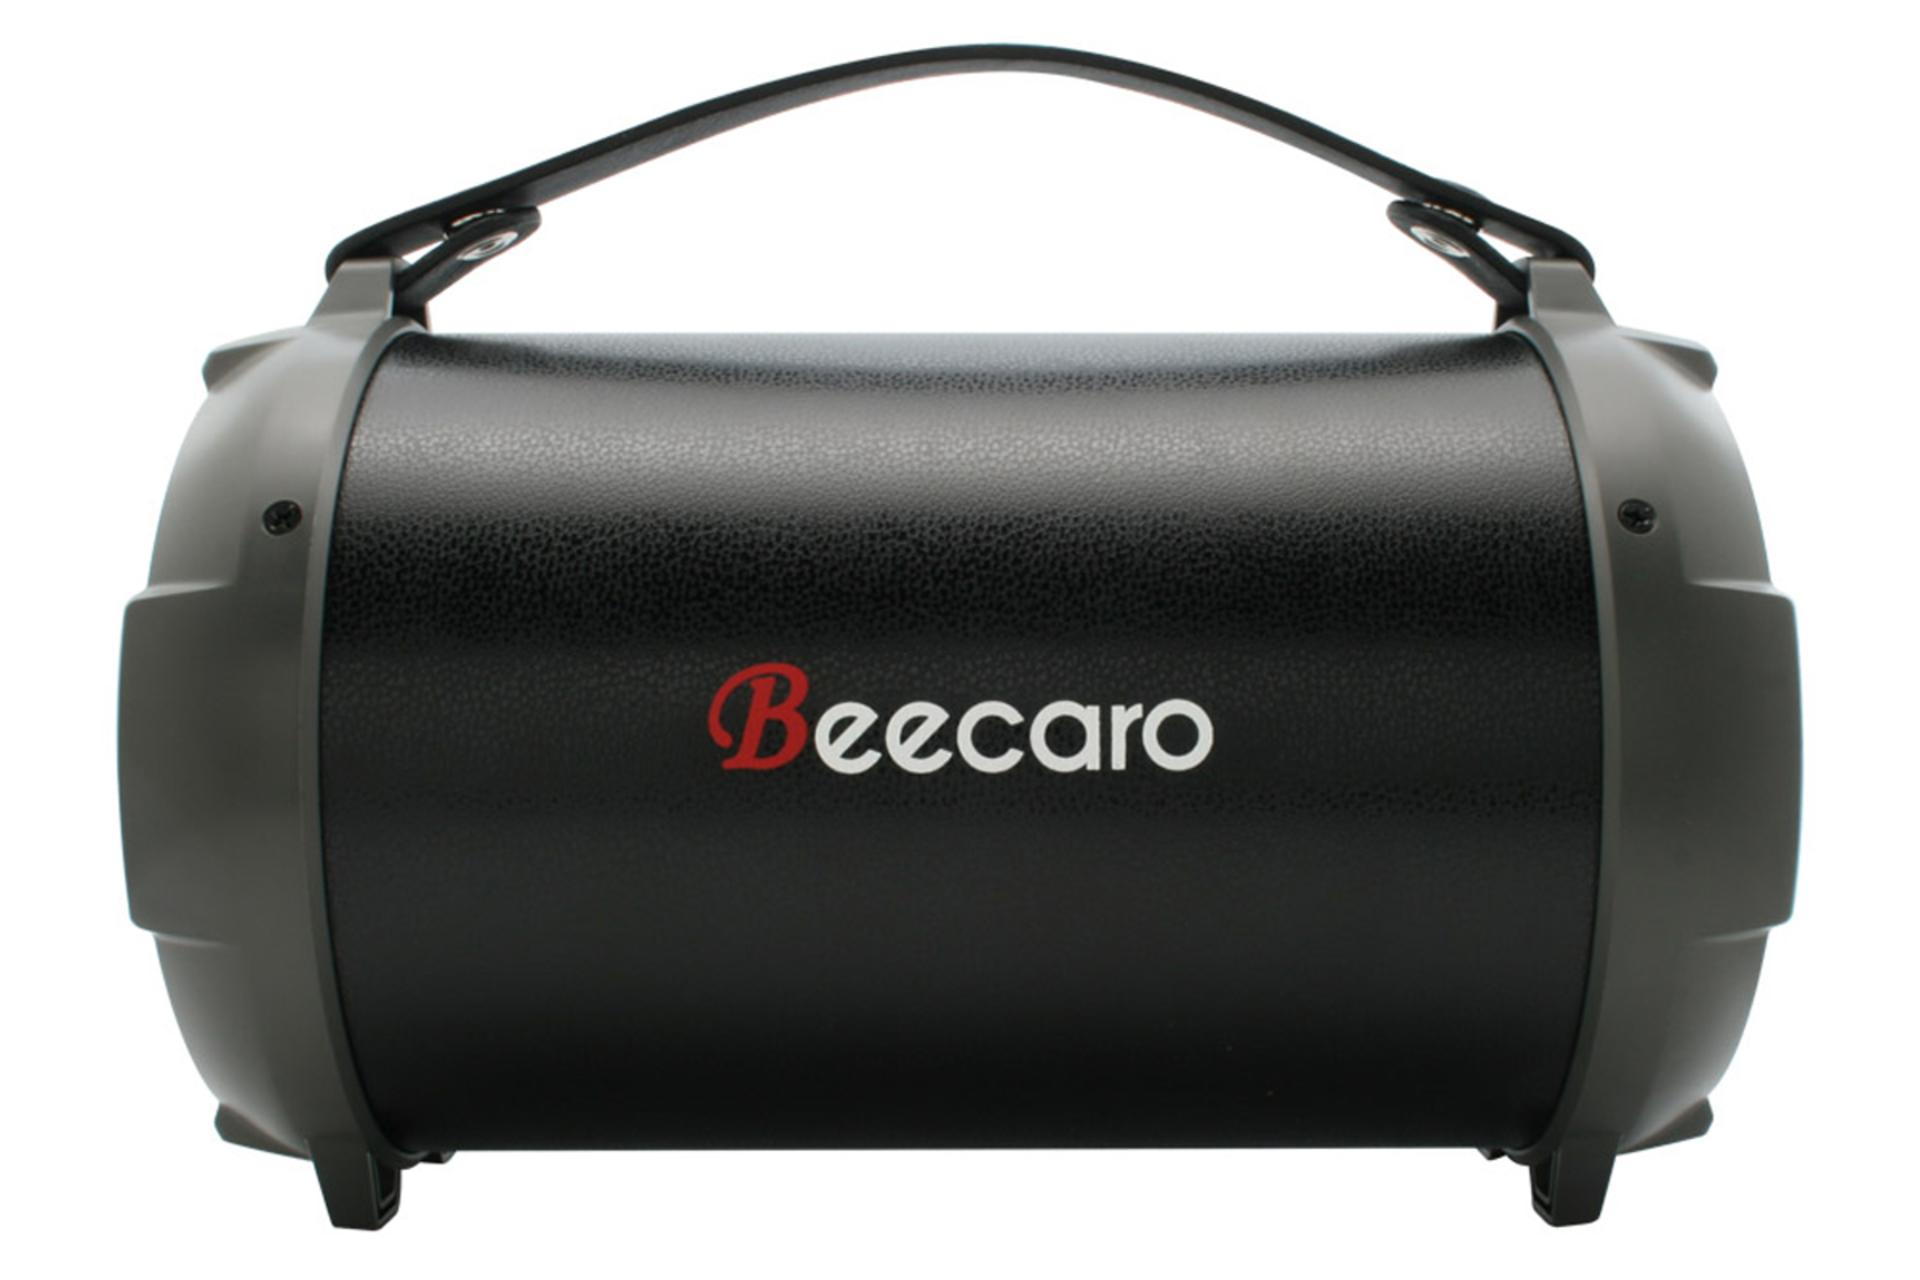 ابعاد اسپیکر بیکارو Beecaro X114